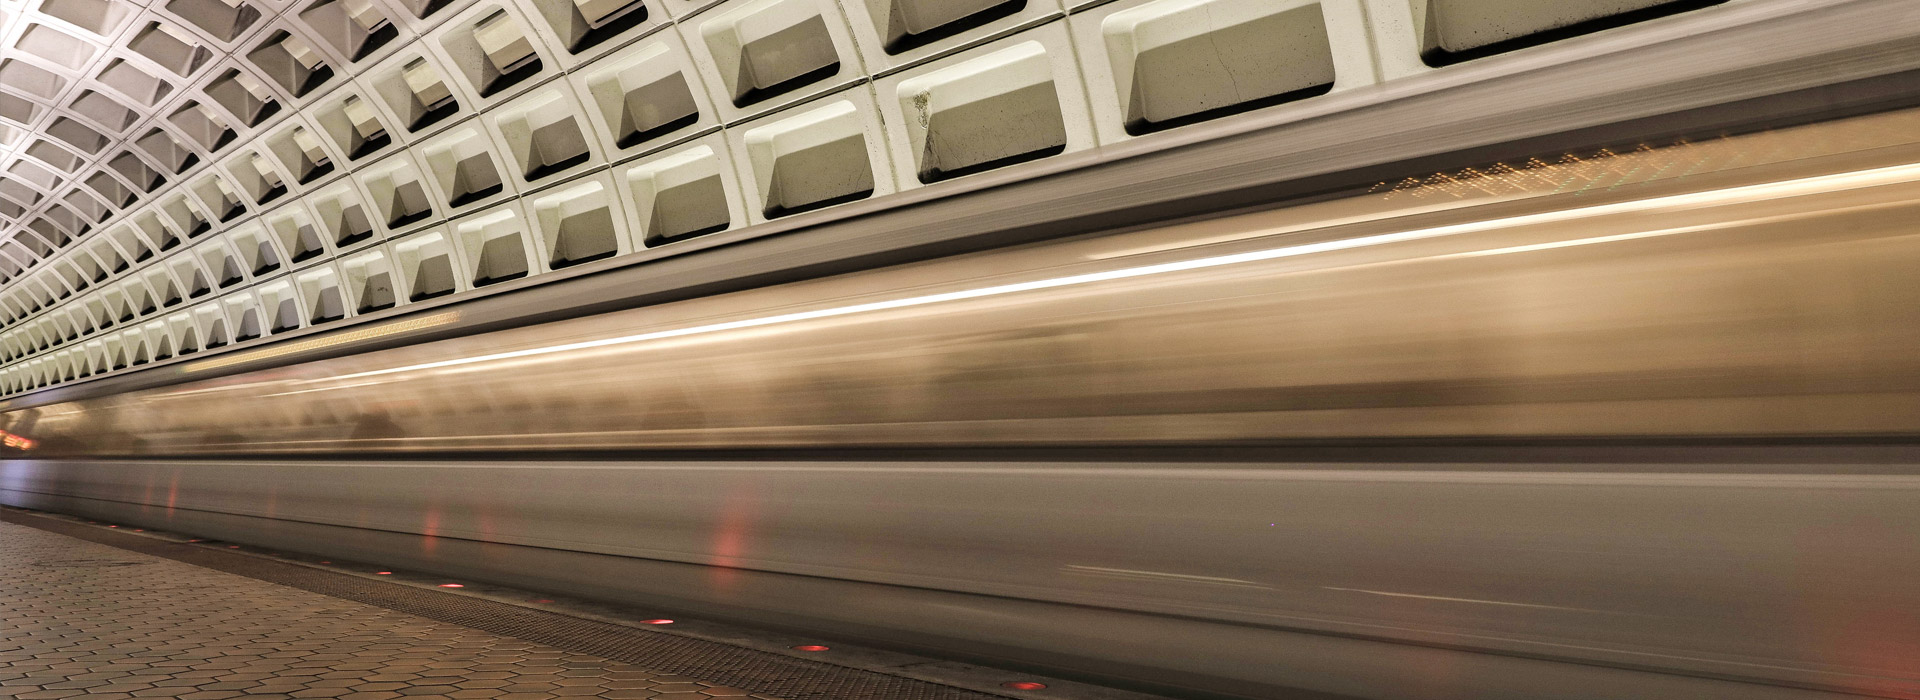 Metro train speeding by in a blur